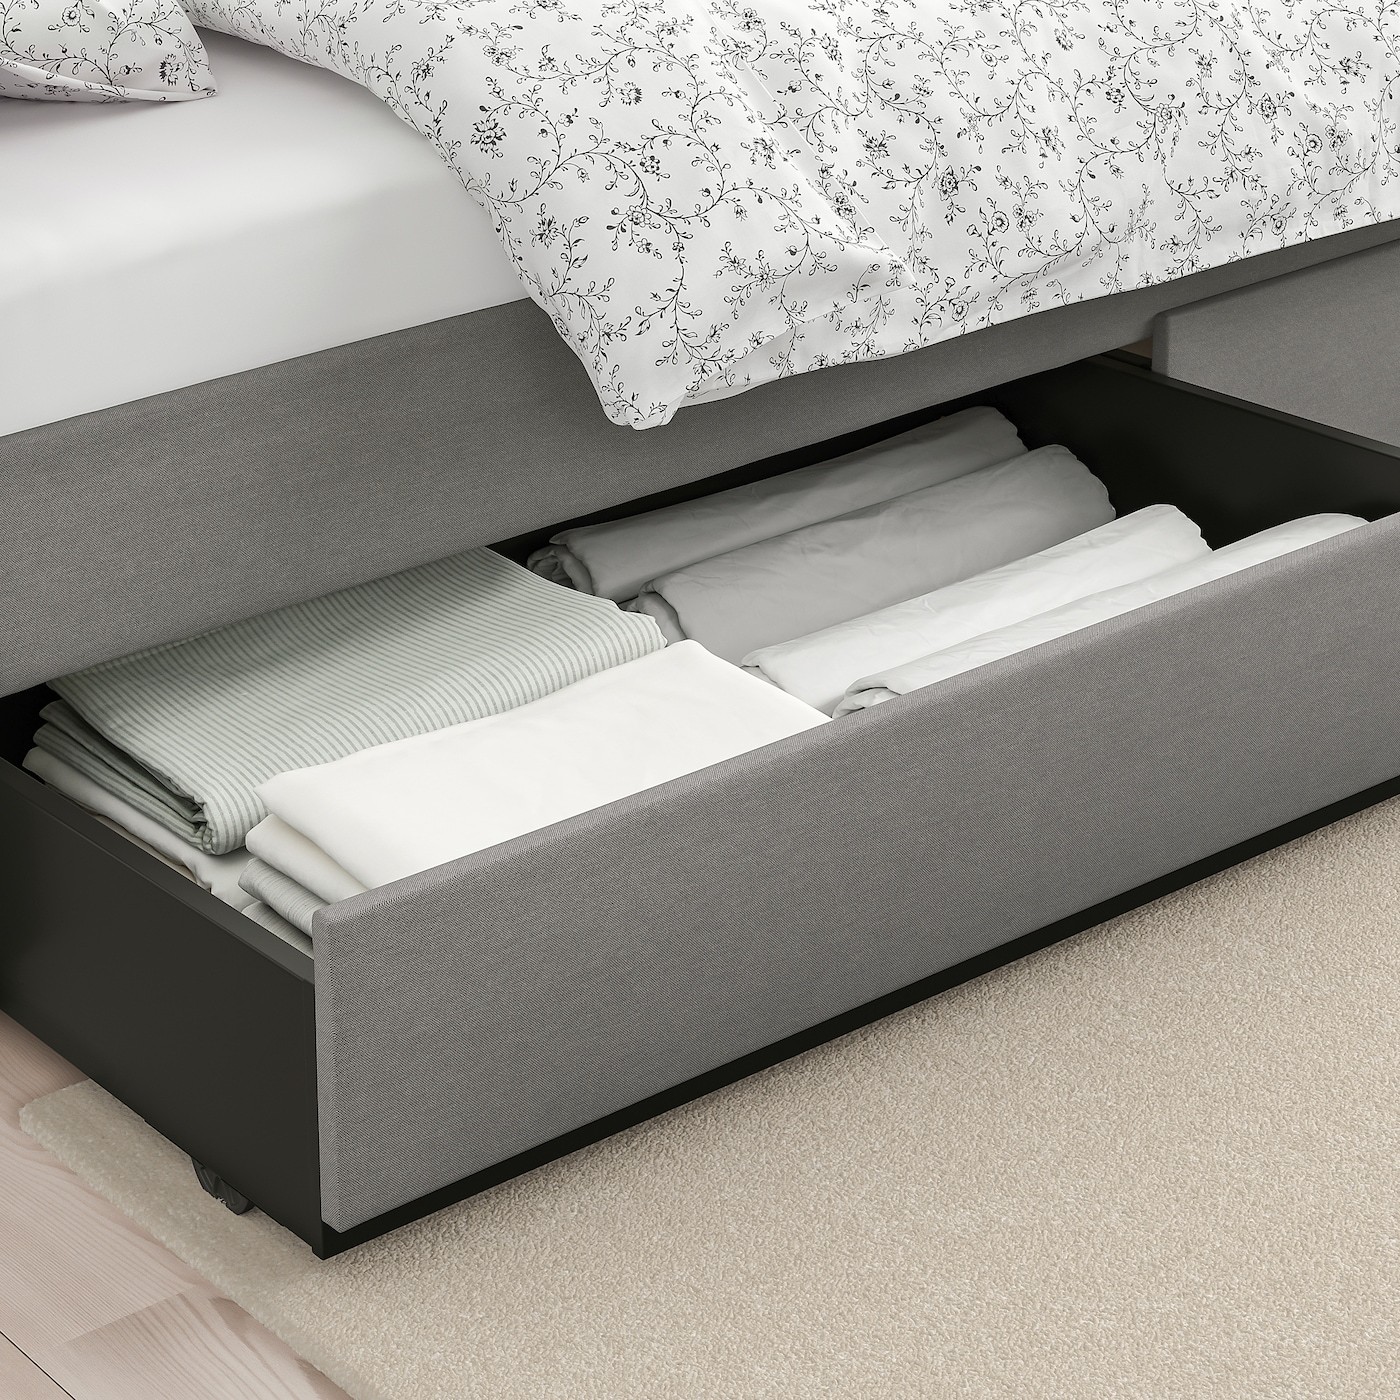 HAUGA Upholstered bed, 2 storage boxes